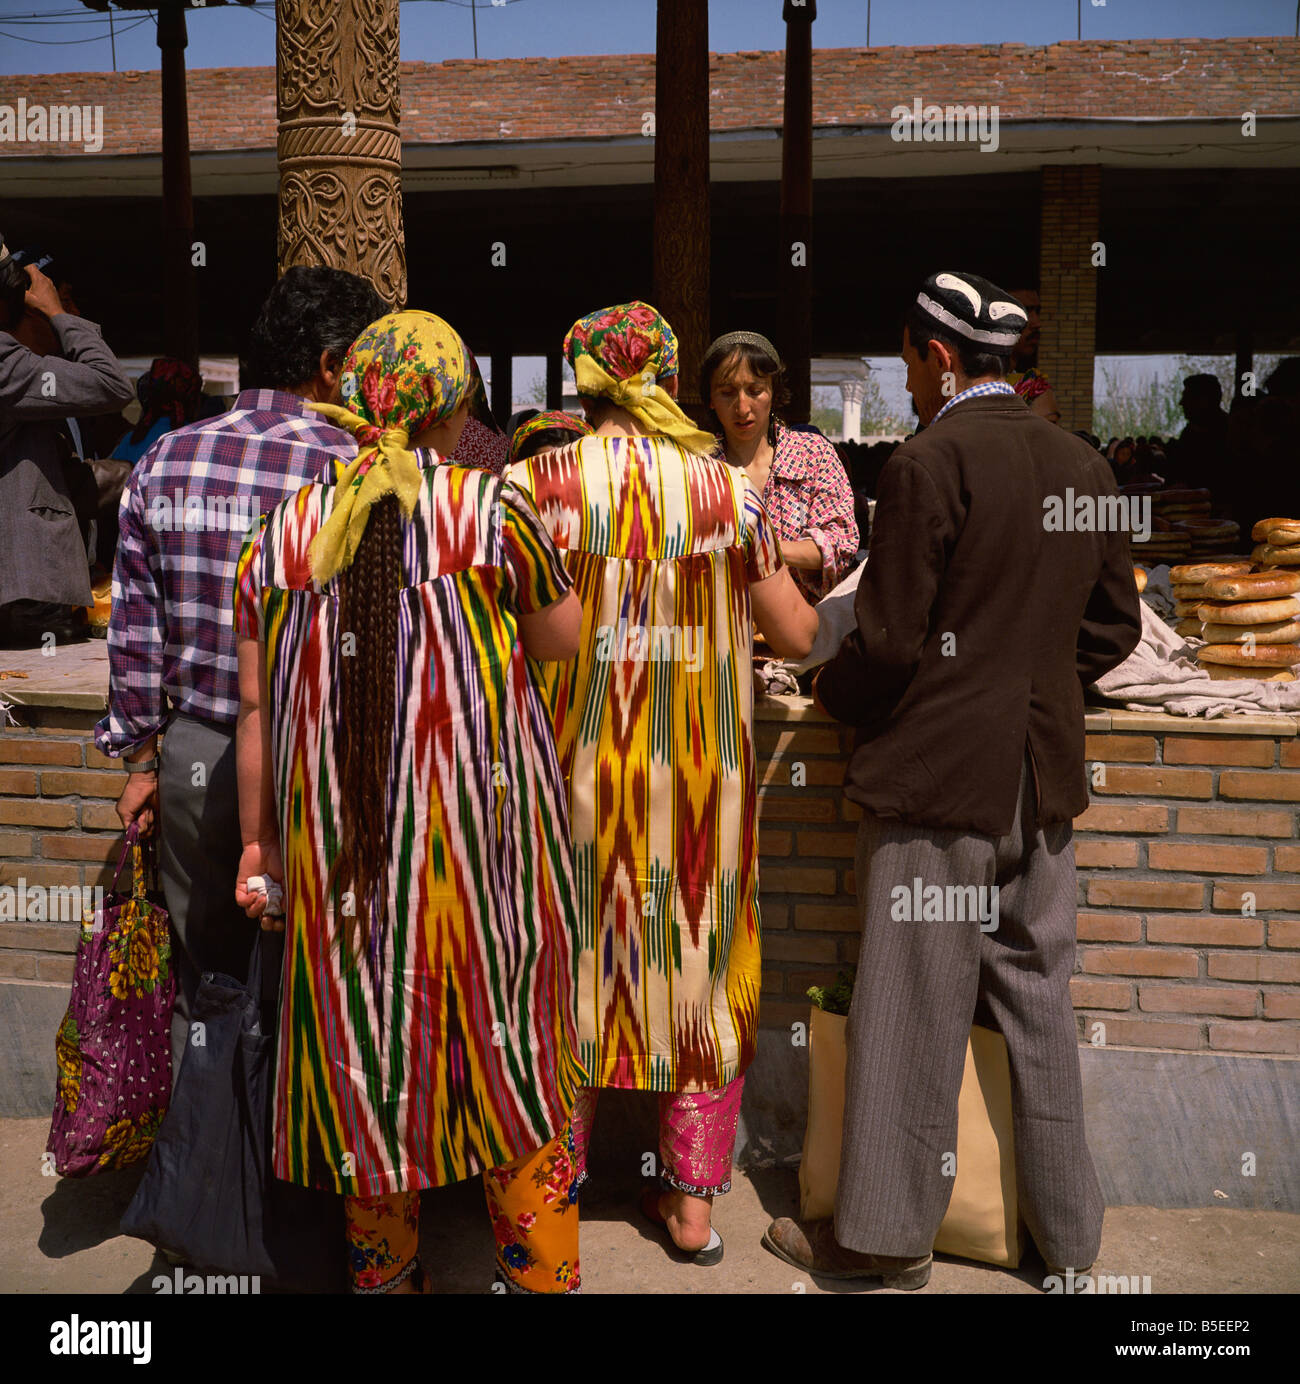 Uzbek women, Central Market, Samarkand, Uzbekistan, Central Asia Stock Photo